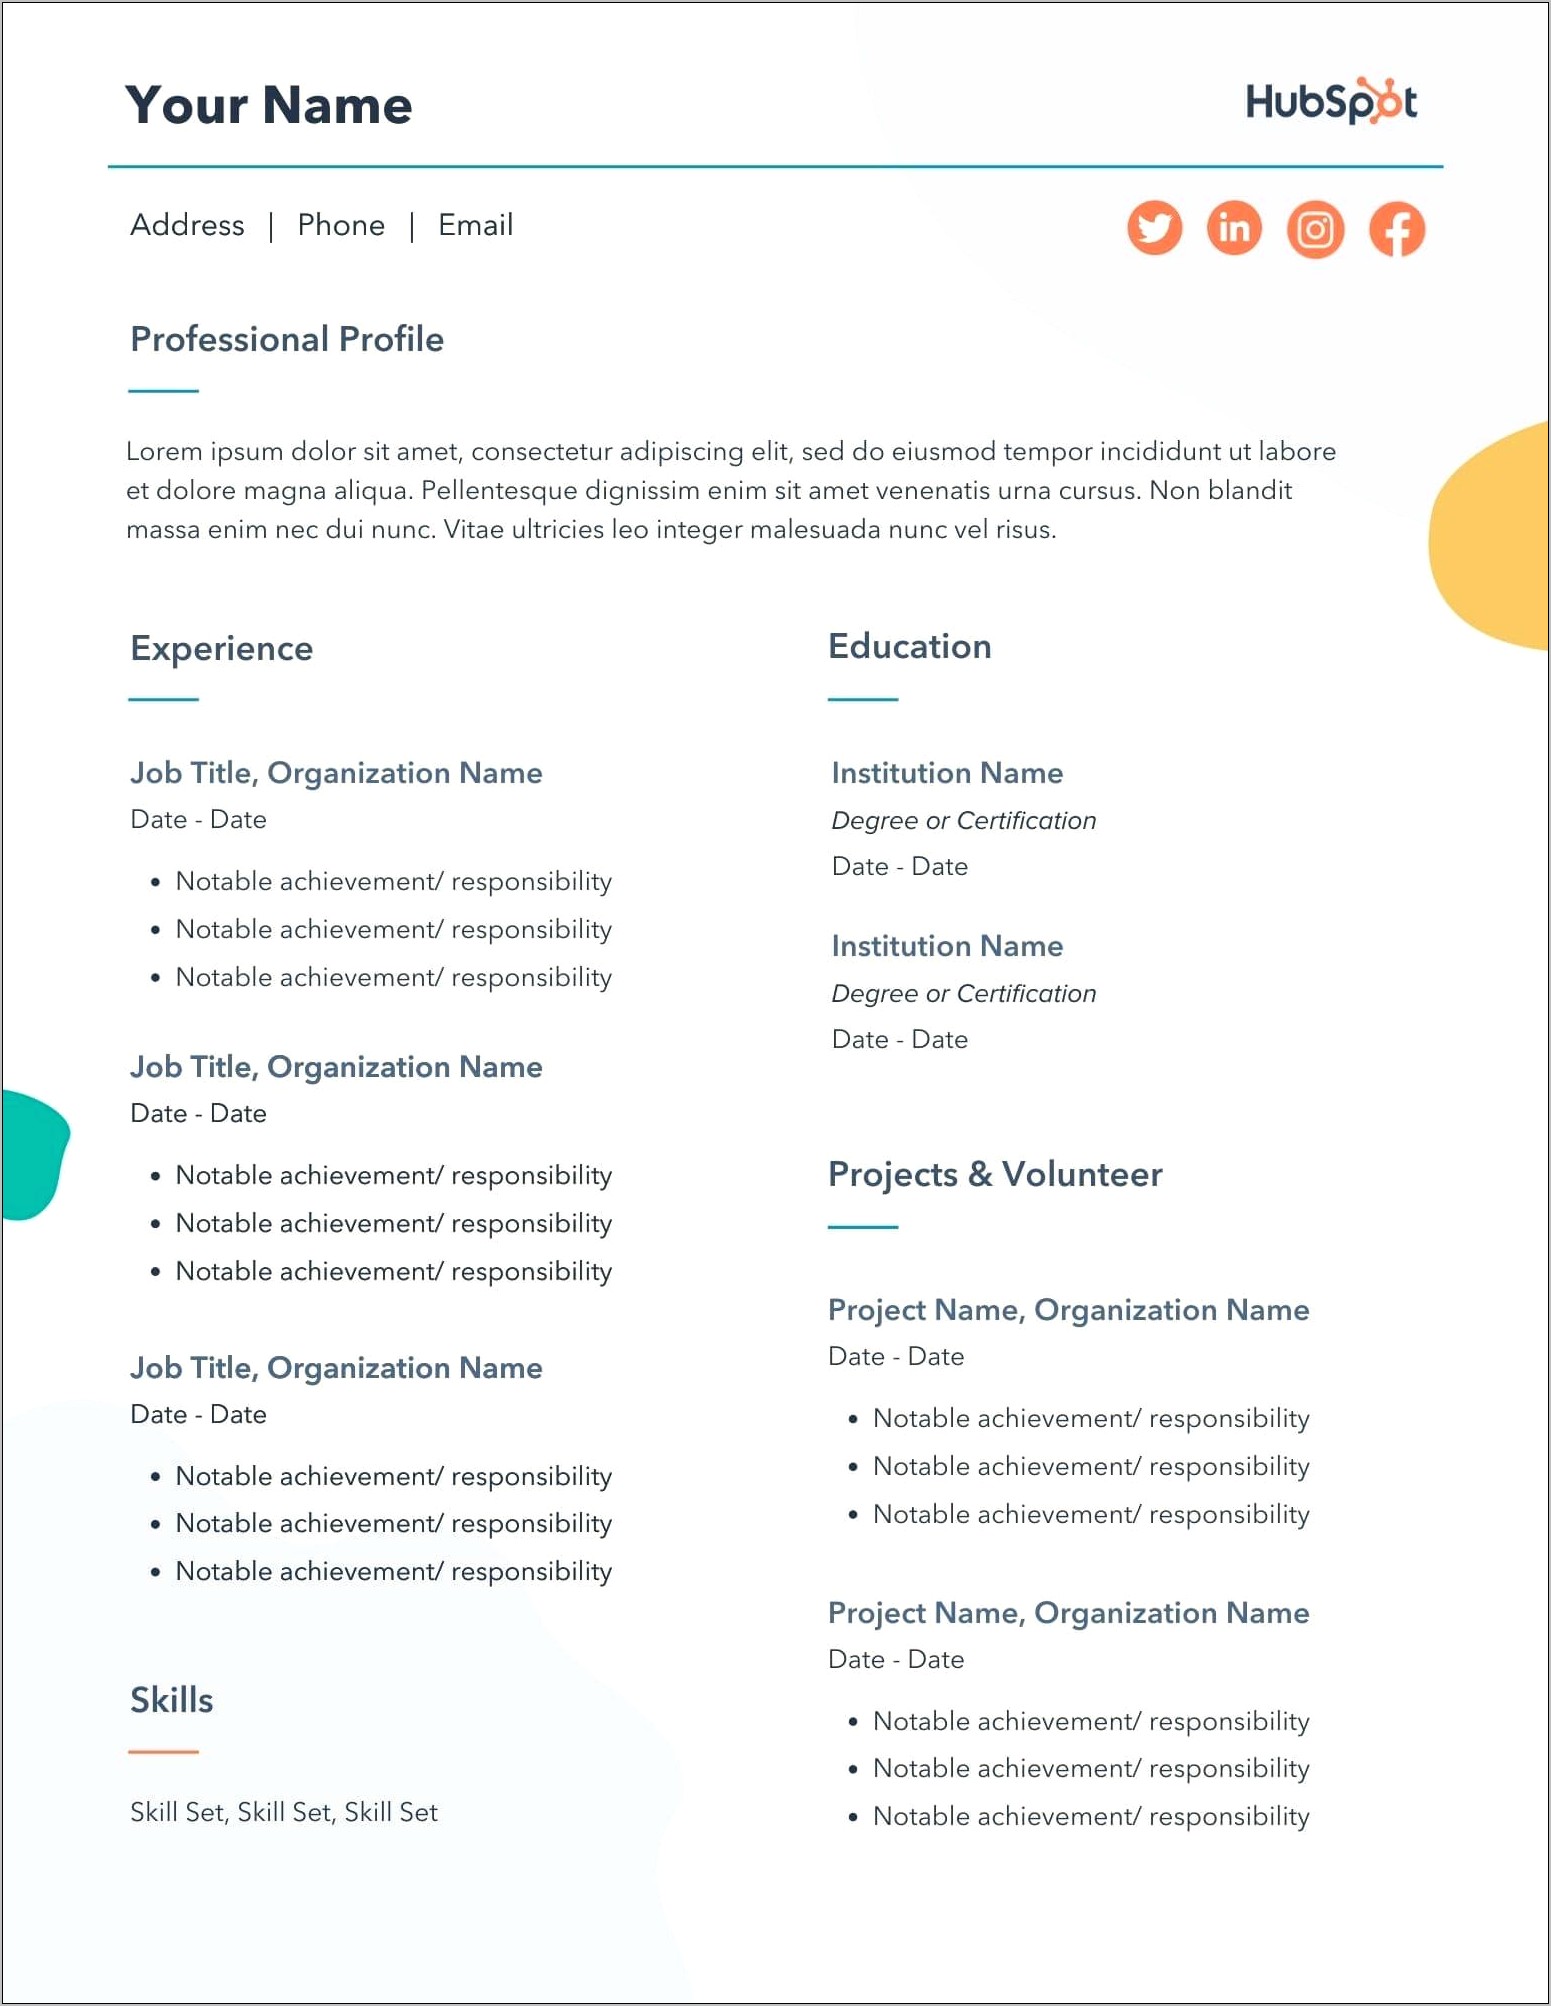 Formatting Problems On Usa Jobs Profile Dashboard Resume